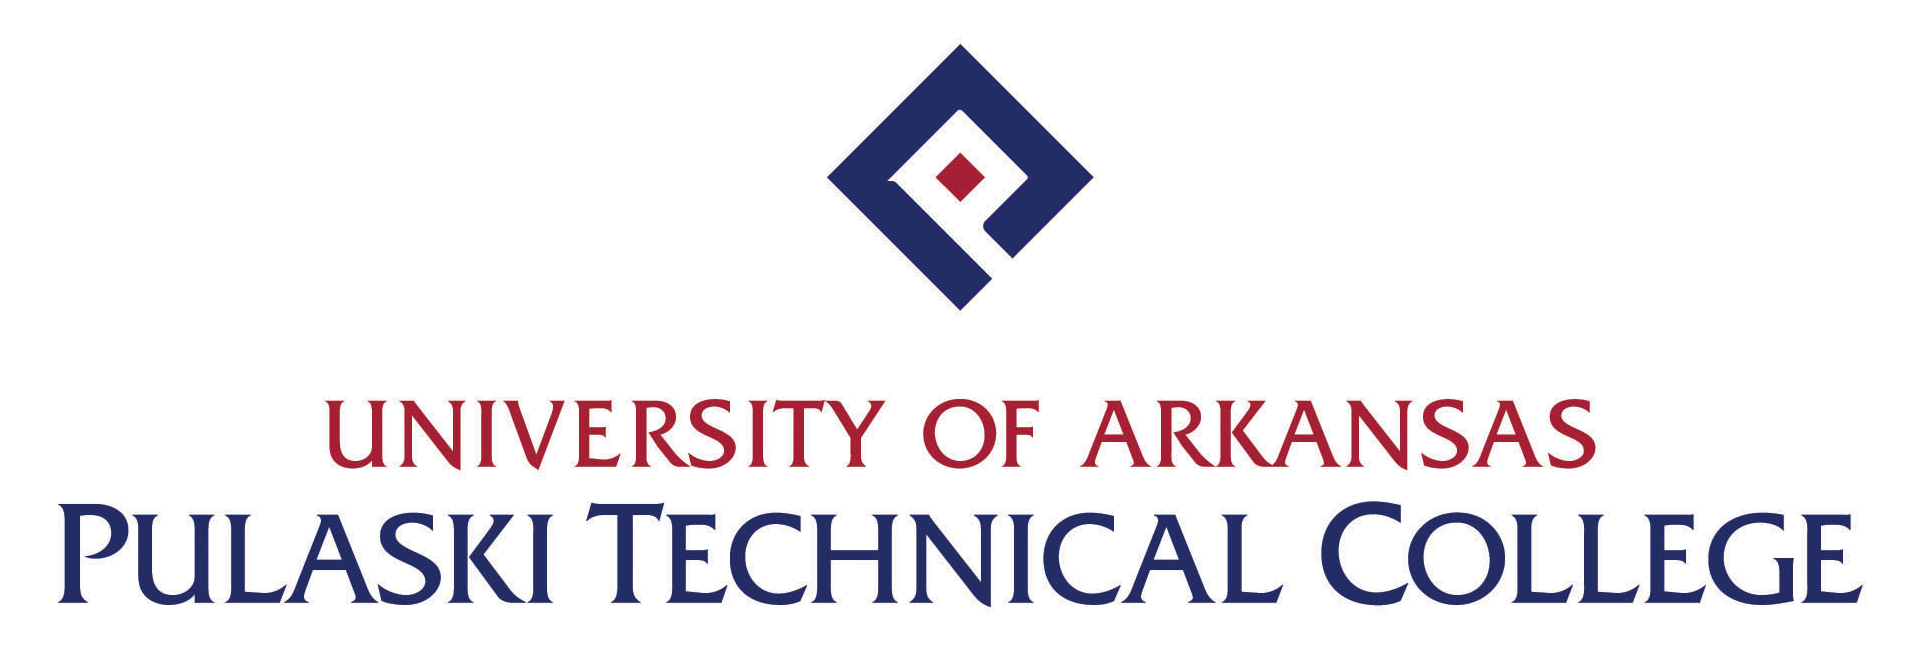 University Of Arkansas Pulaski Technical College - University Of Arkansas System